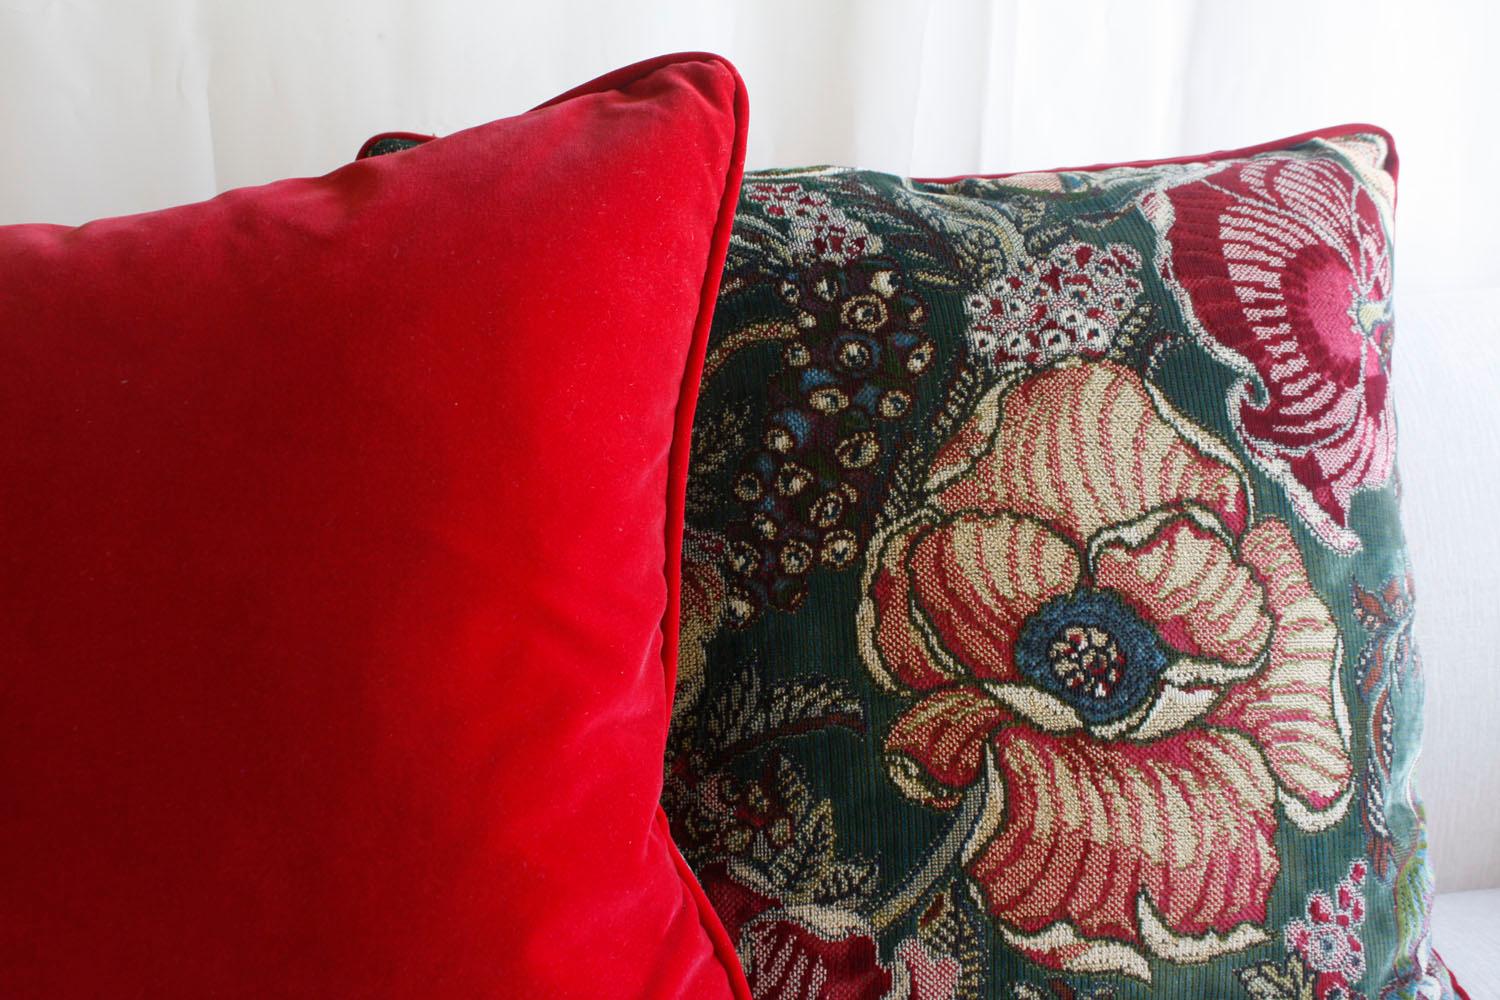 Textile Antique Pillows with Red Velvet Floral Elegance For Sale